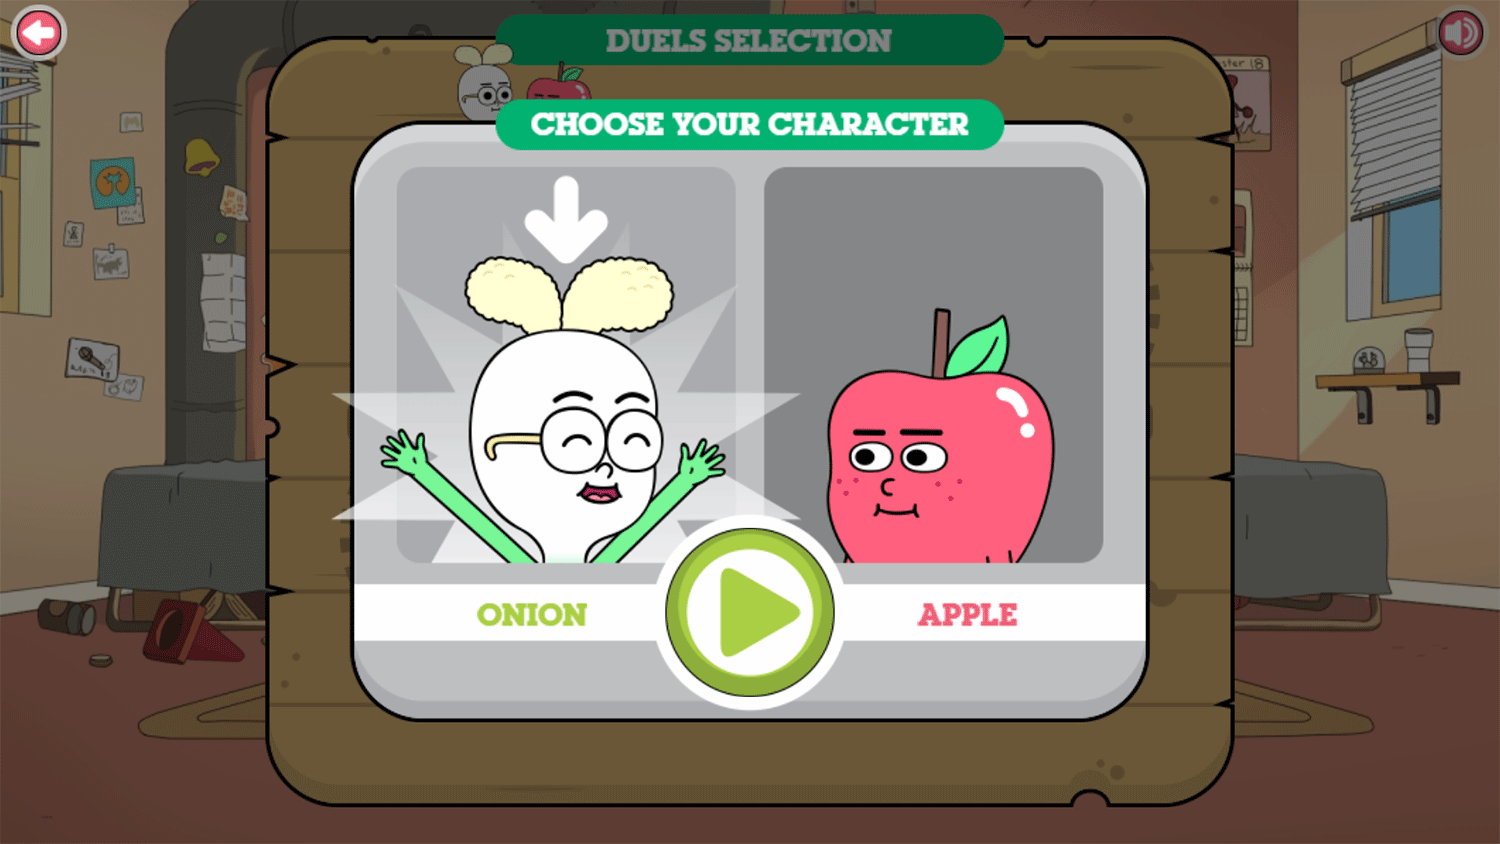 Apple & Onion Beats Battle Choose Character Screenshot.